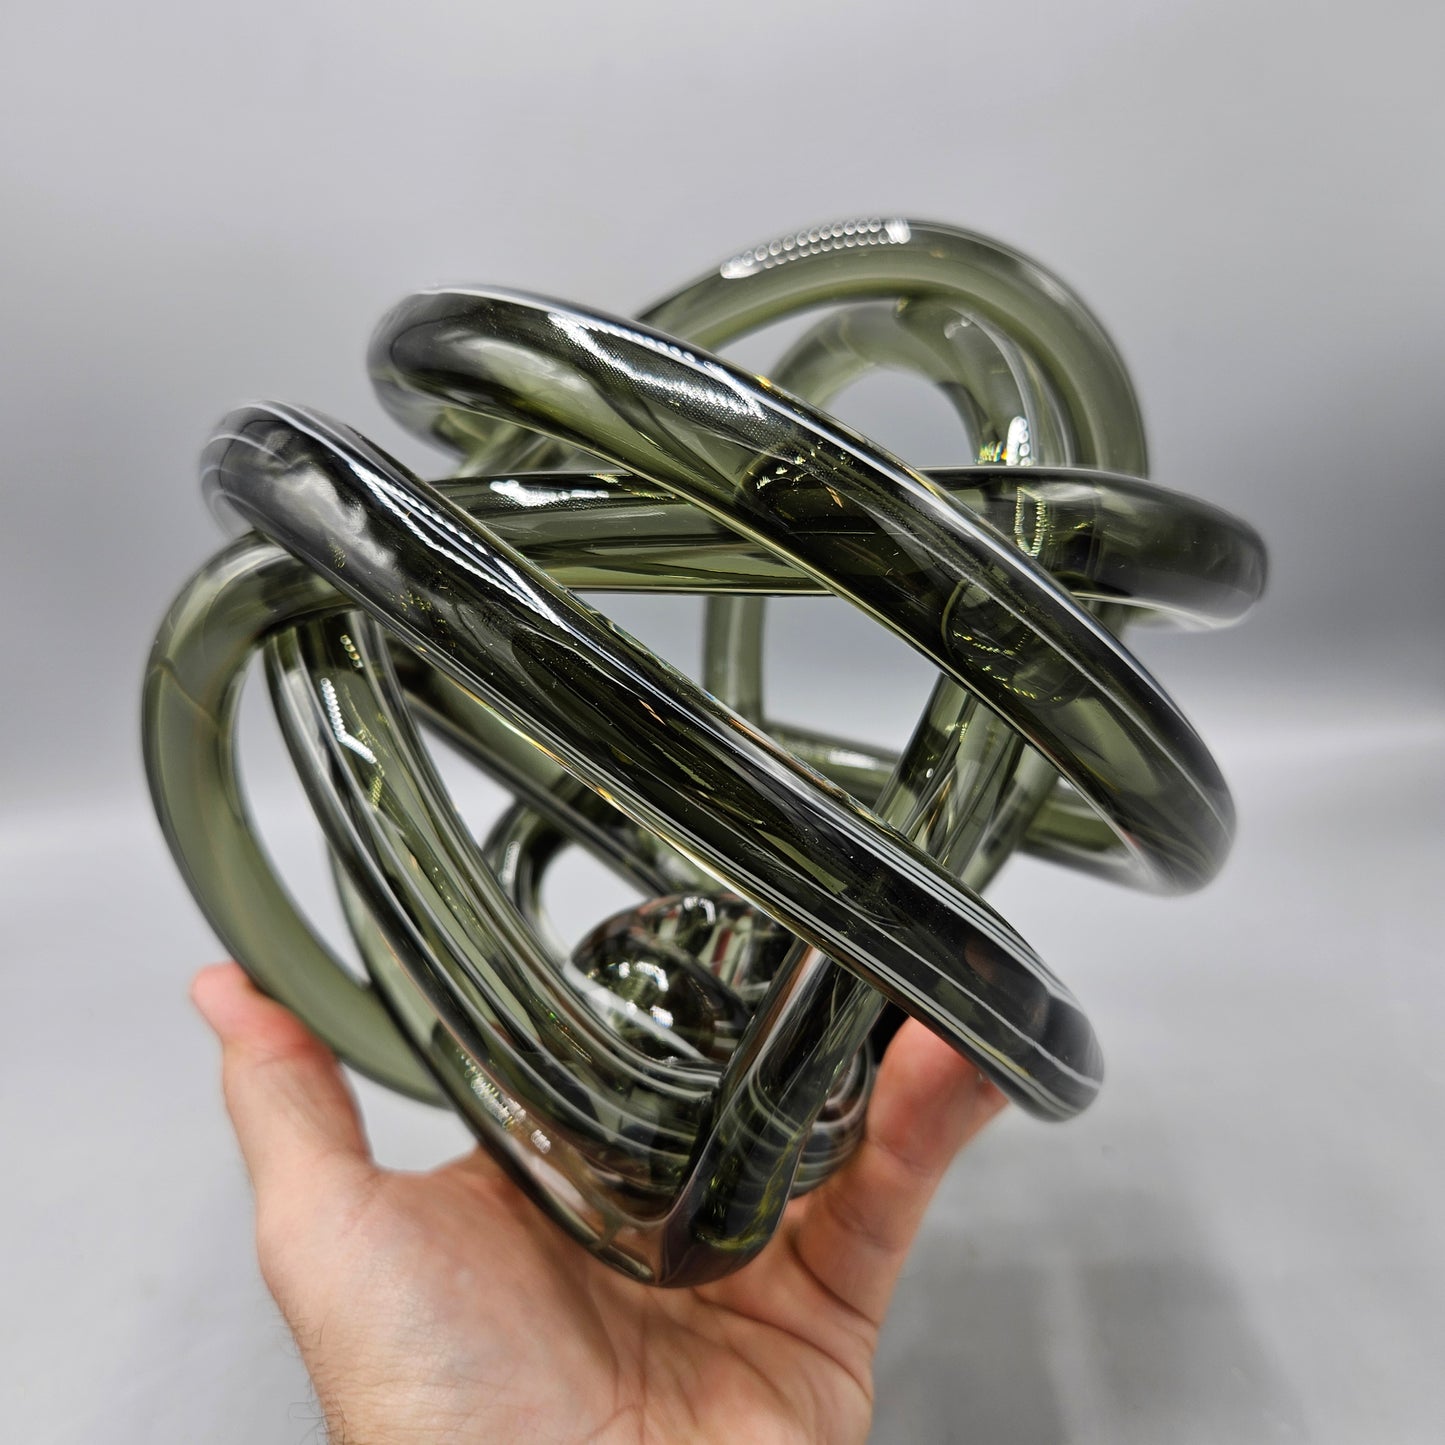 Large Smoky Art Glass Murano Style Infinity Knot Decor